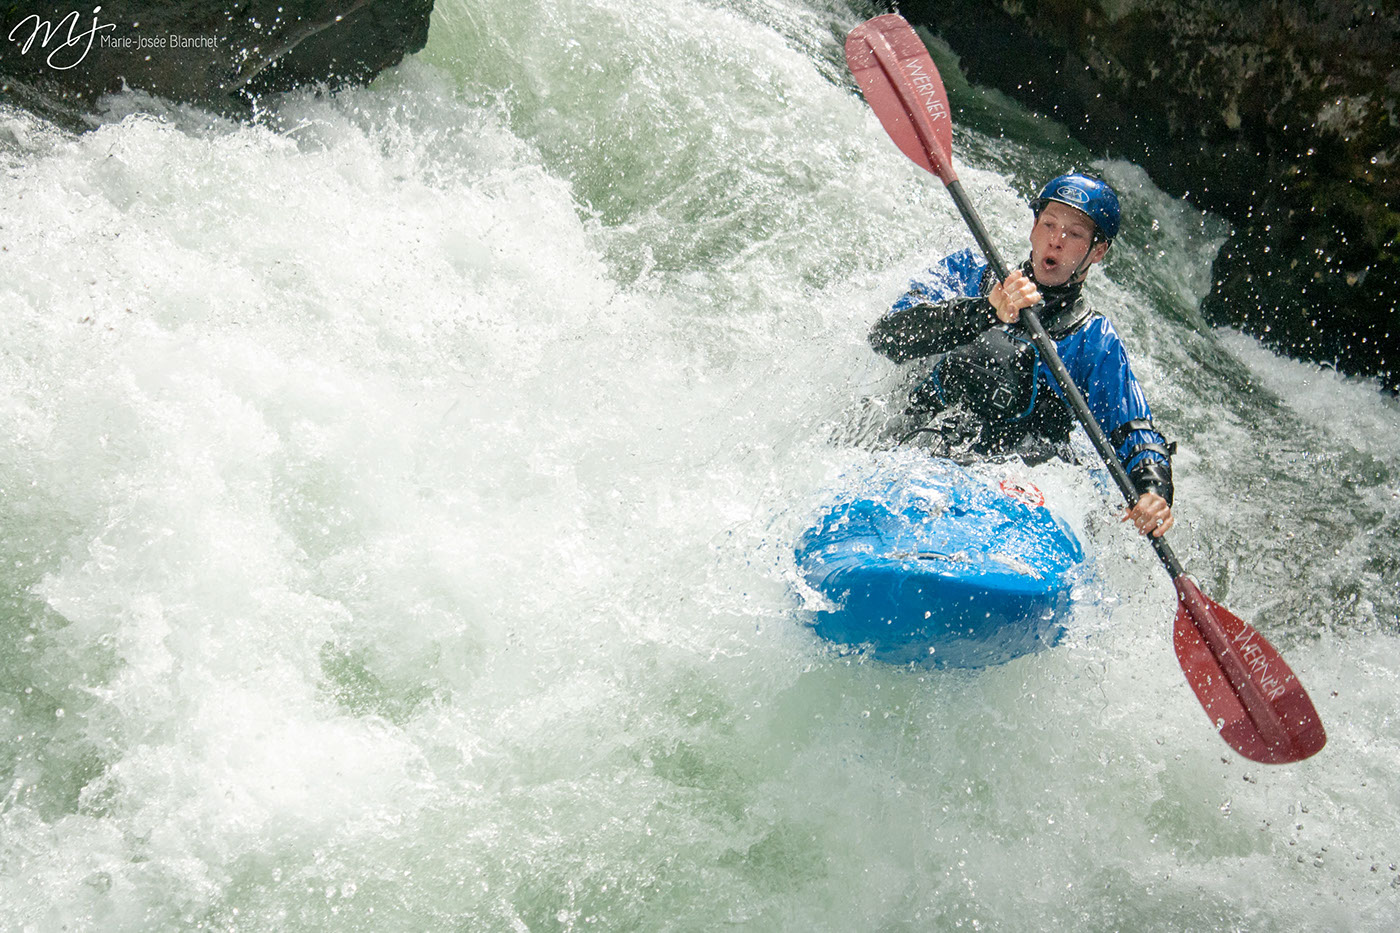 Adobe Portfolio race Canada whistler british columbia Cheakamus river kayak rafting water waterfall boat athlete flow